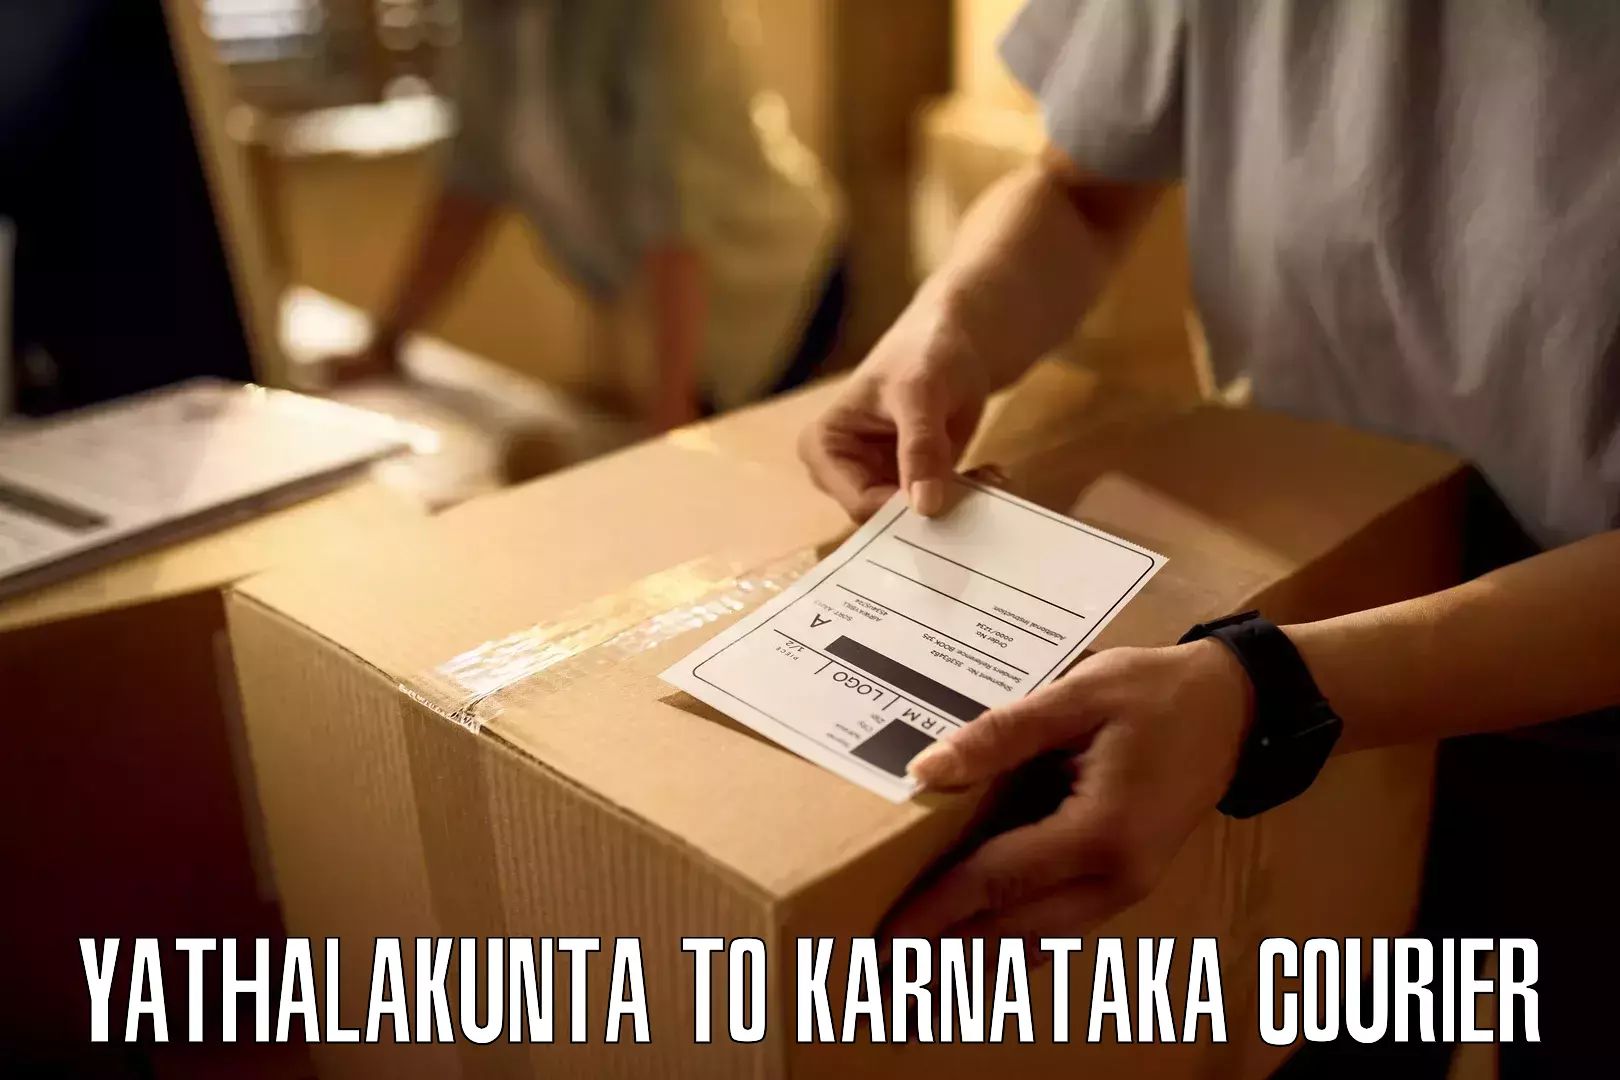 Modern courier technology Yathalakunta to Eedu